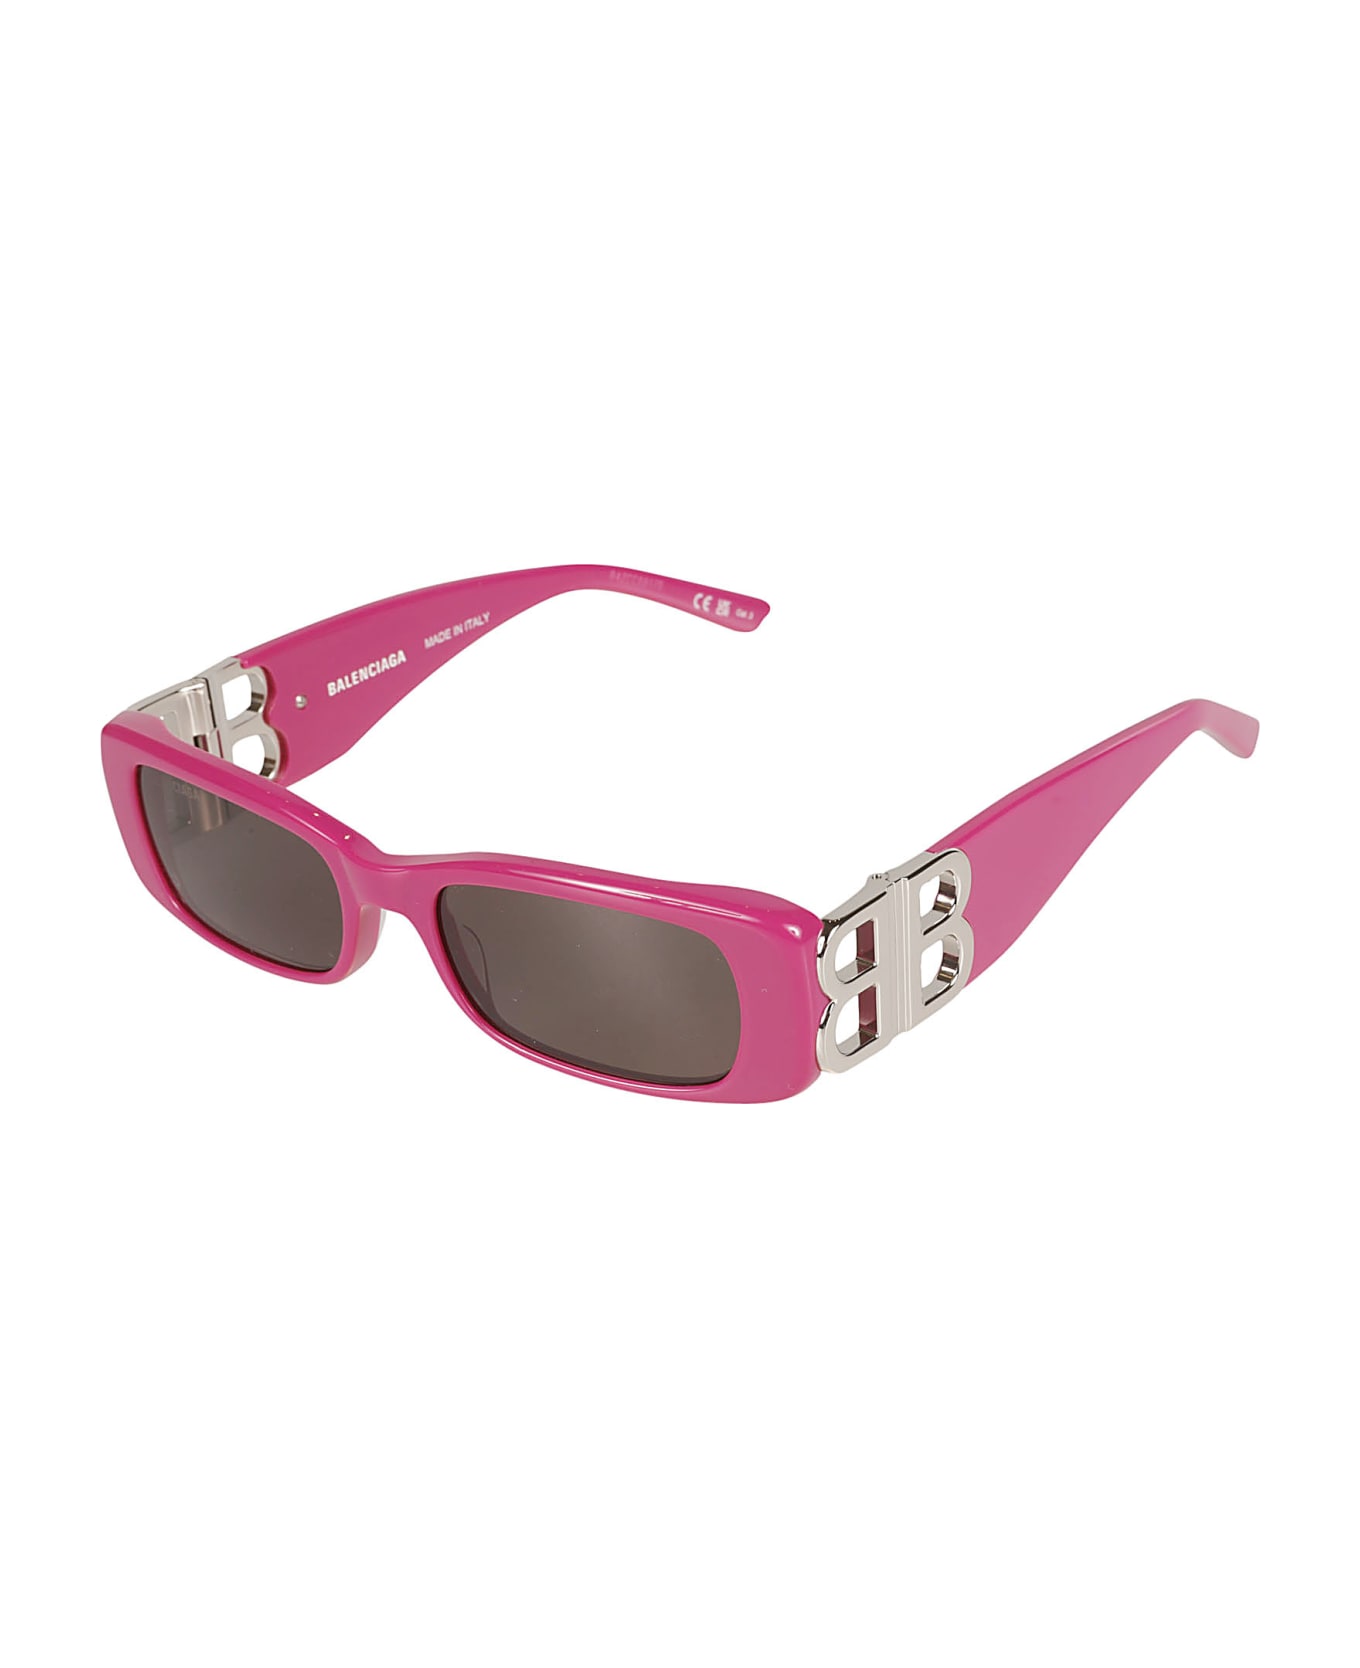 Balenciaga Eyewear Rectangular Bb Sunglasses - Fuchsia/Silver/Grey